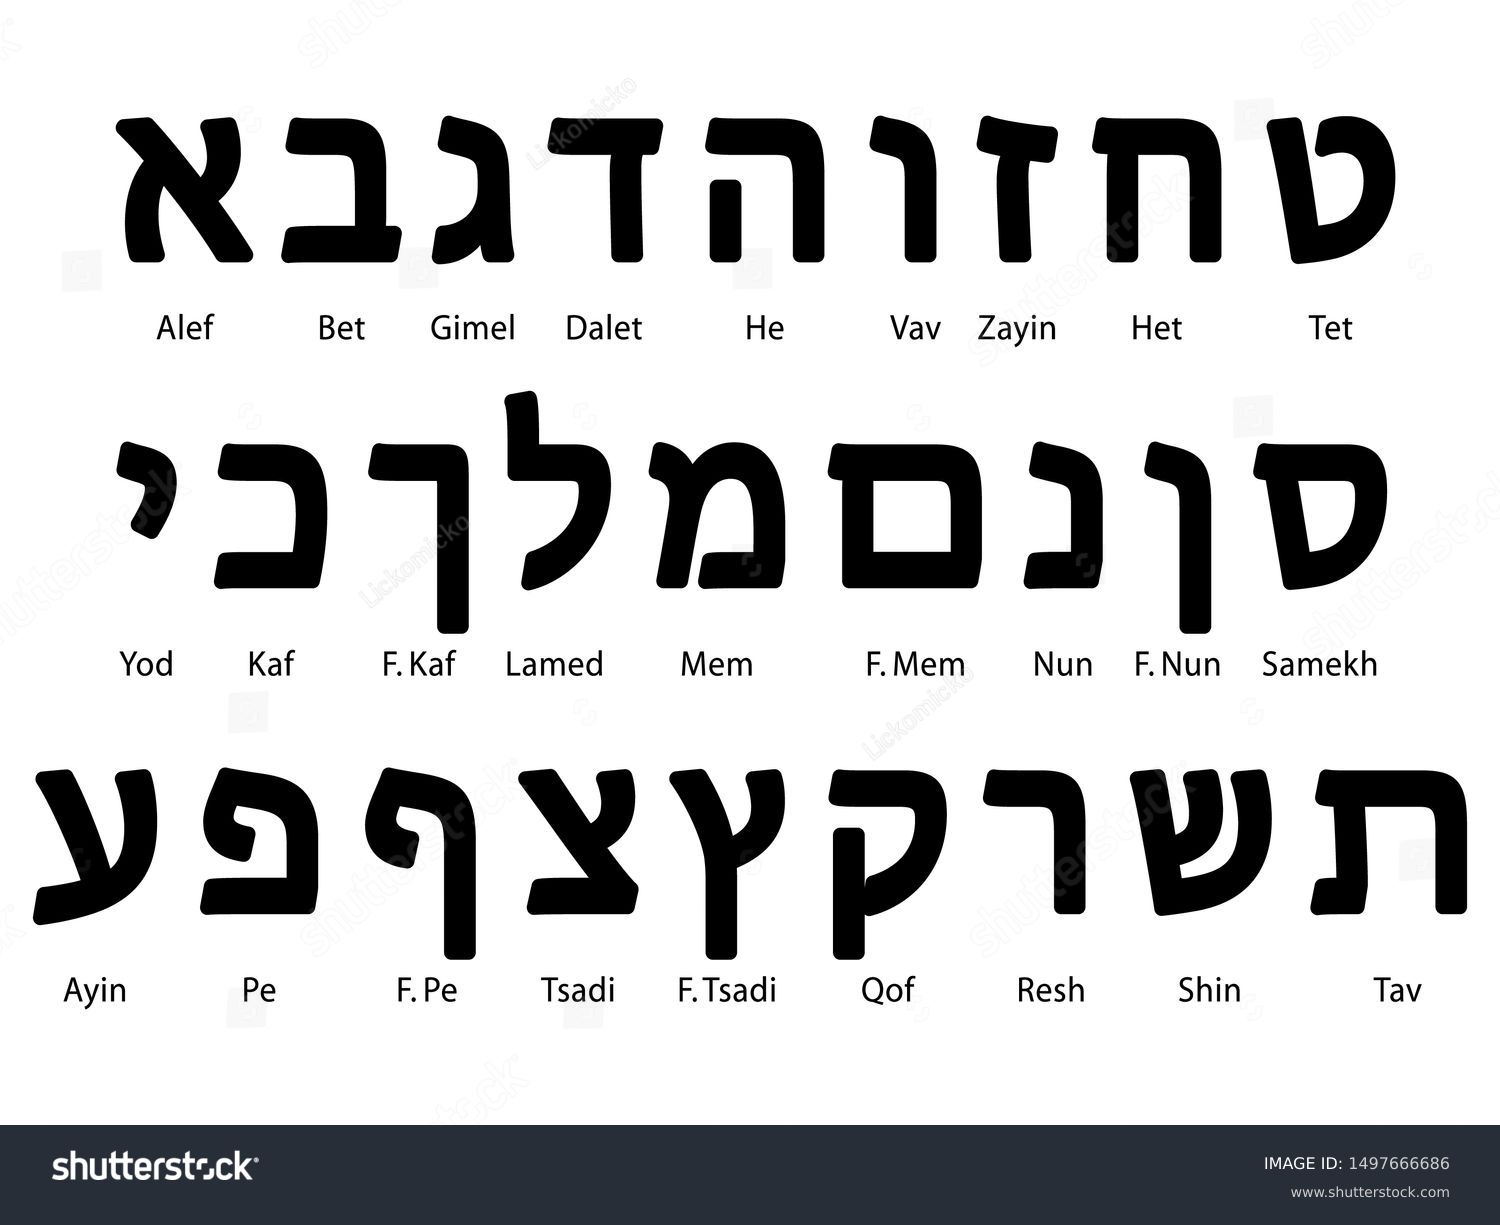 SVG of Set of Hebrew Alphabet Letters With Names svg